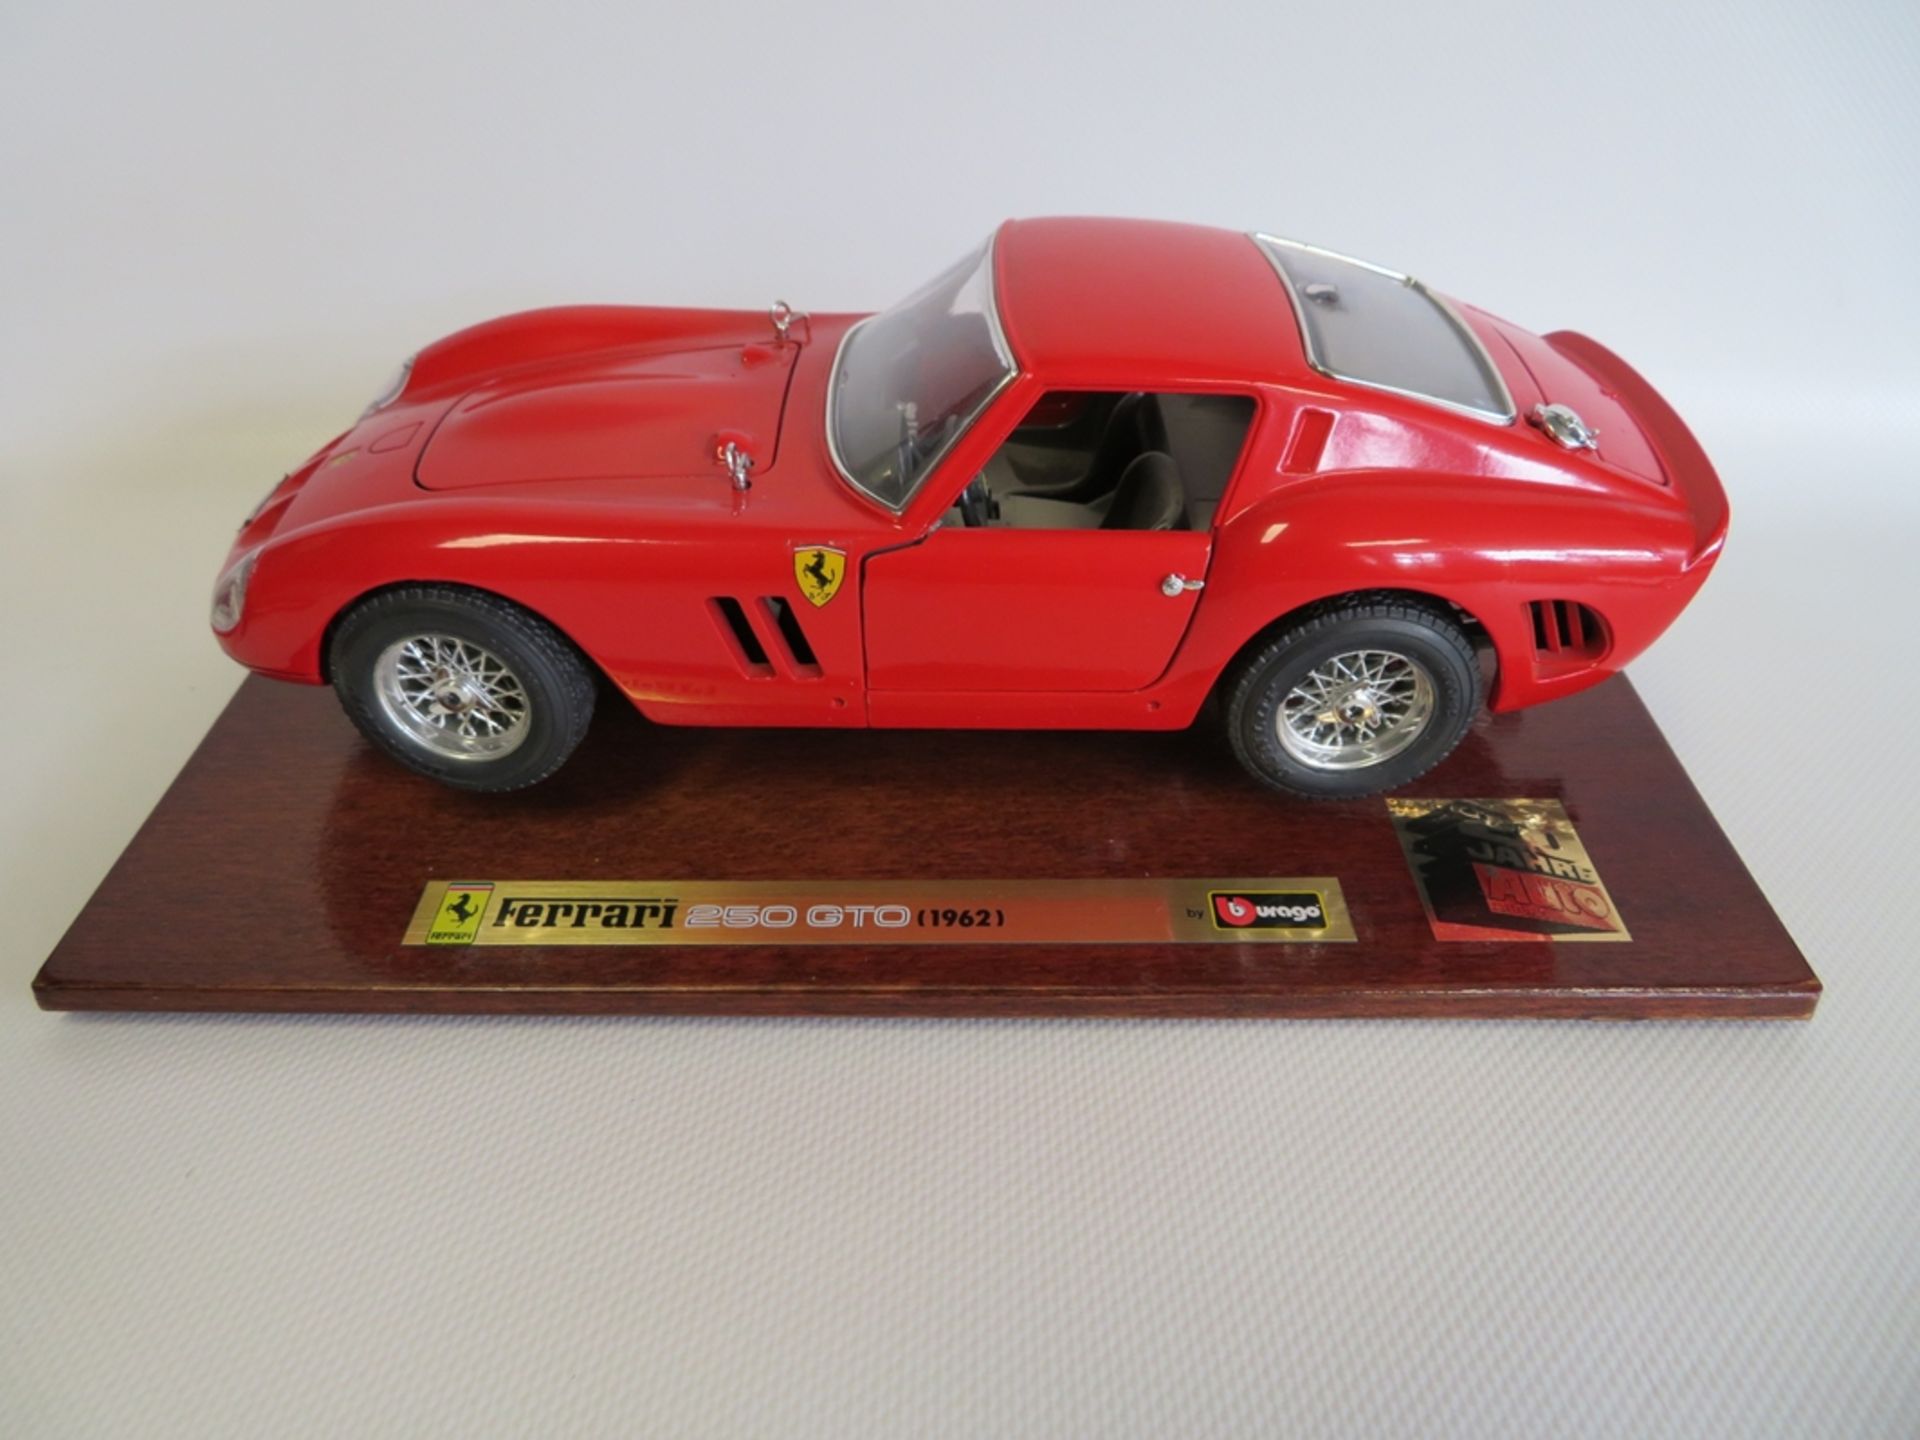 Modellauto, Burago, Ferrari 250 GTO (1962), Sondermodell "20 Jahre Autozeitung", auf Holzsockel,